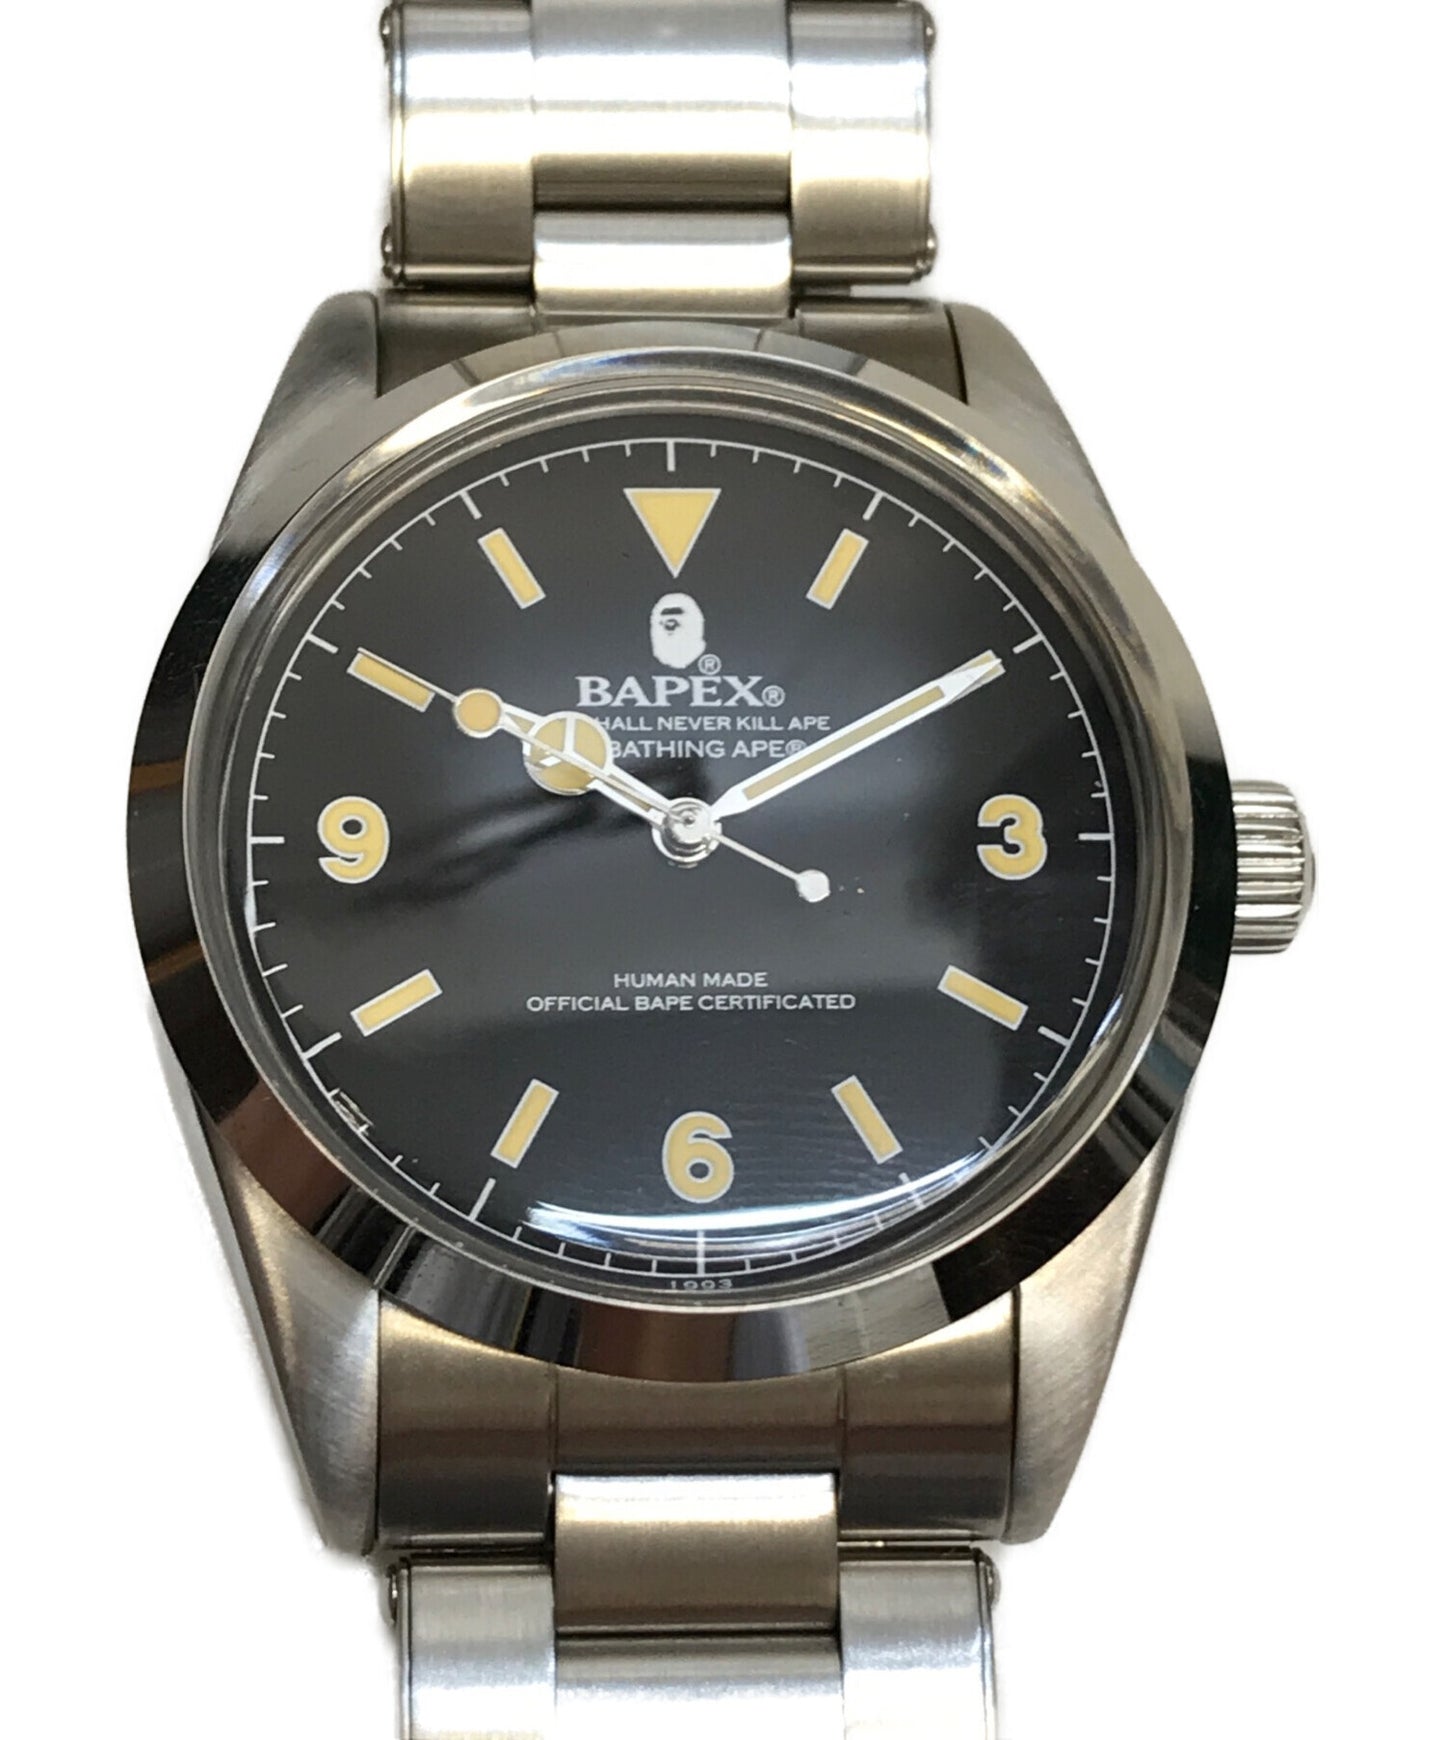 A BATHING APE Classic BAPEX Automatic Wristwatch 1I30-187-002